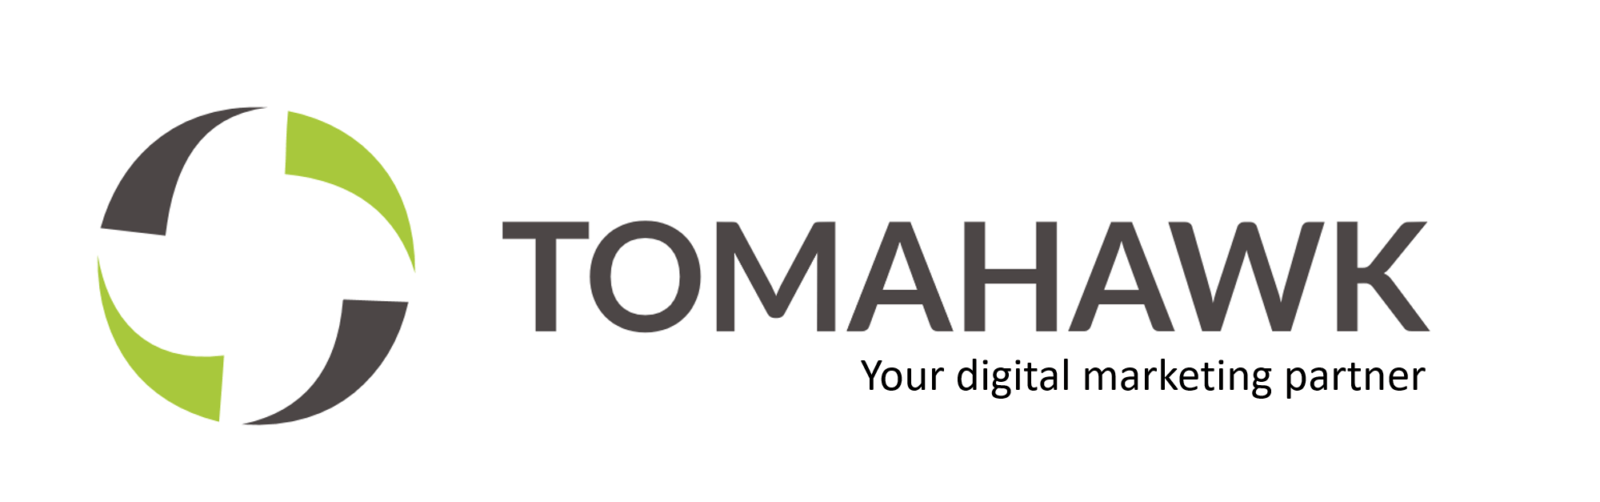 Tomahawk Logo - Tomahawk-logo - PATA